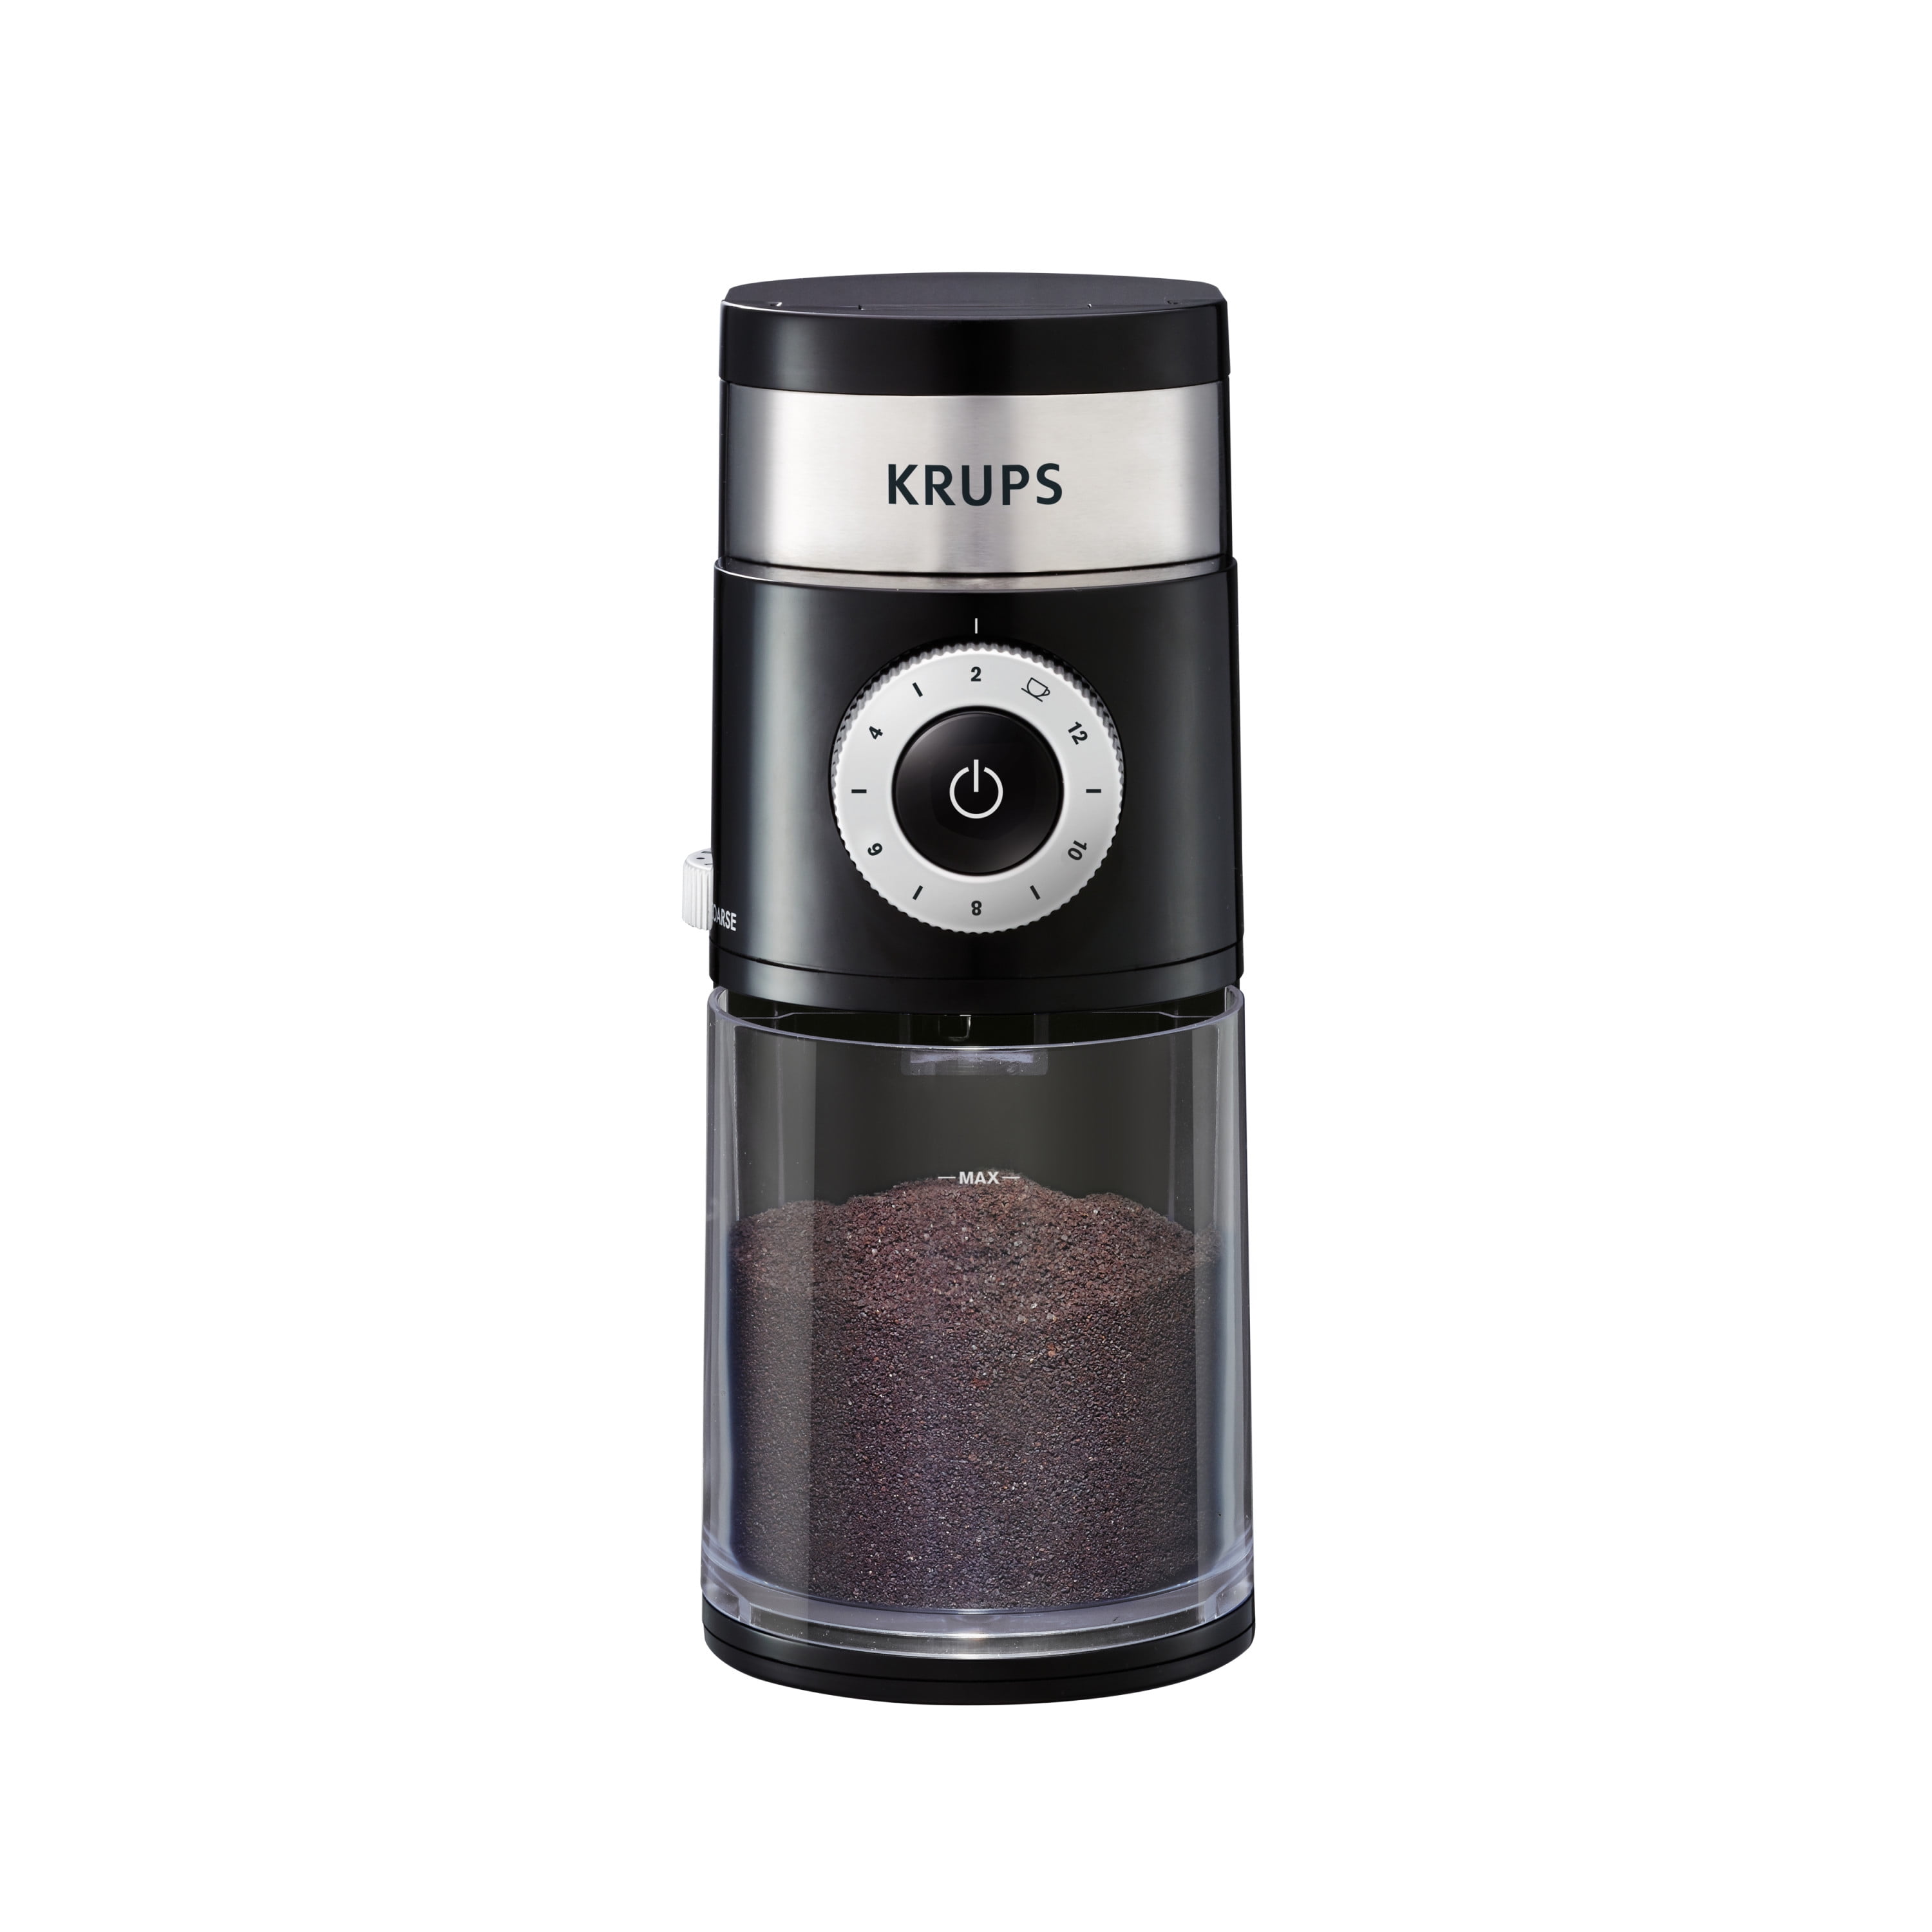 KRUPS GX500 Coffee Grinder Black Precision Flat Burr 12 Cup 12 Grind Working